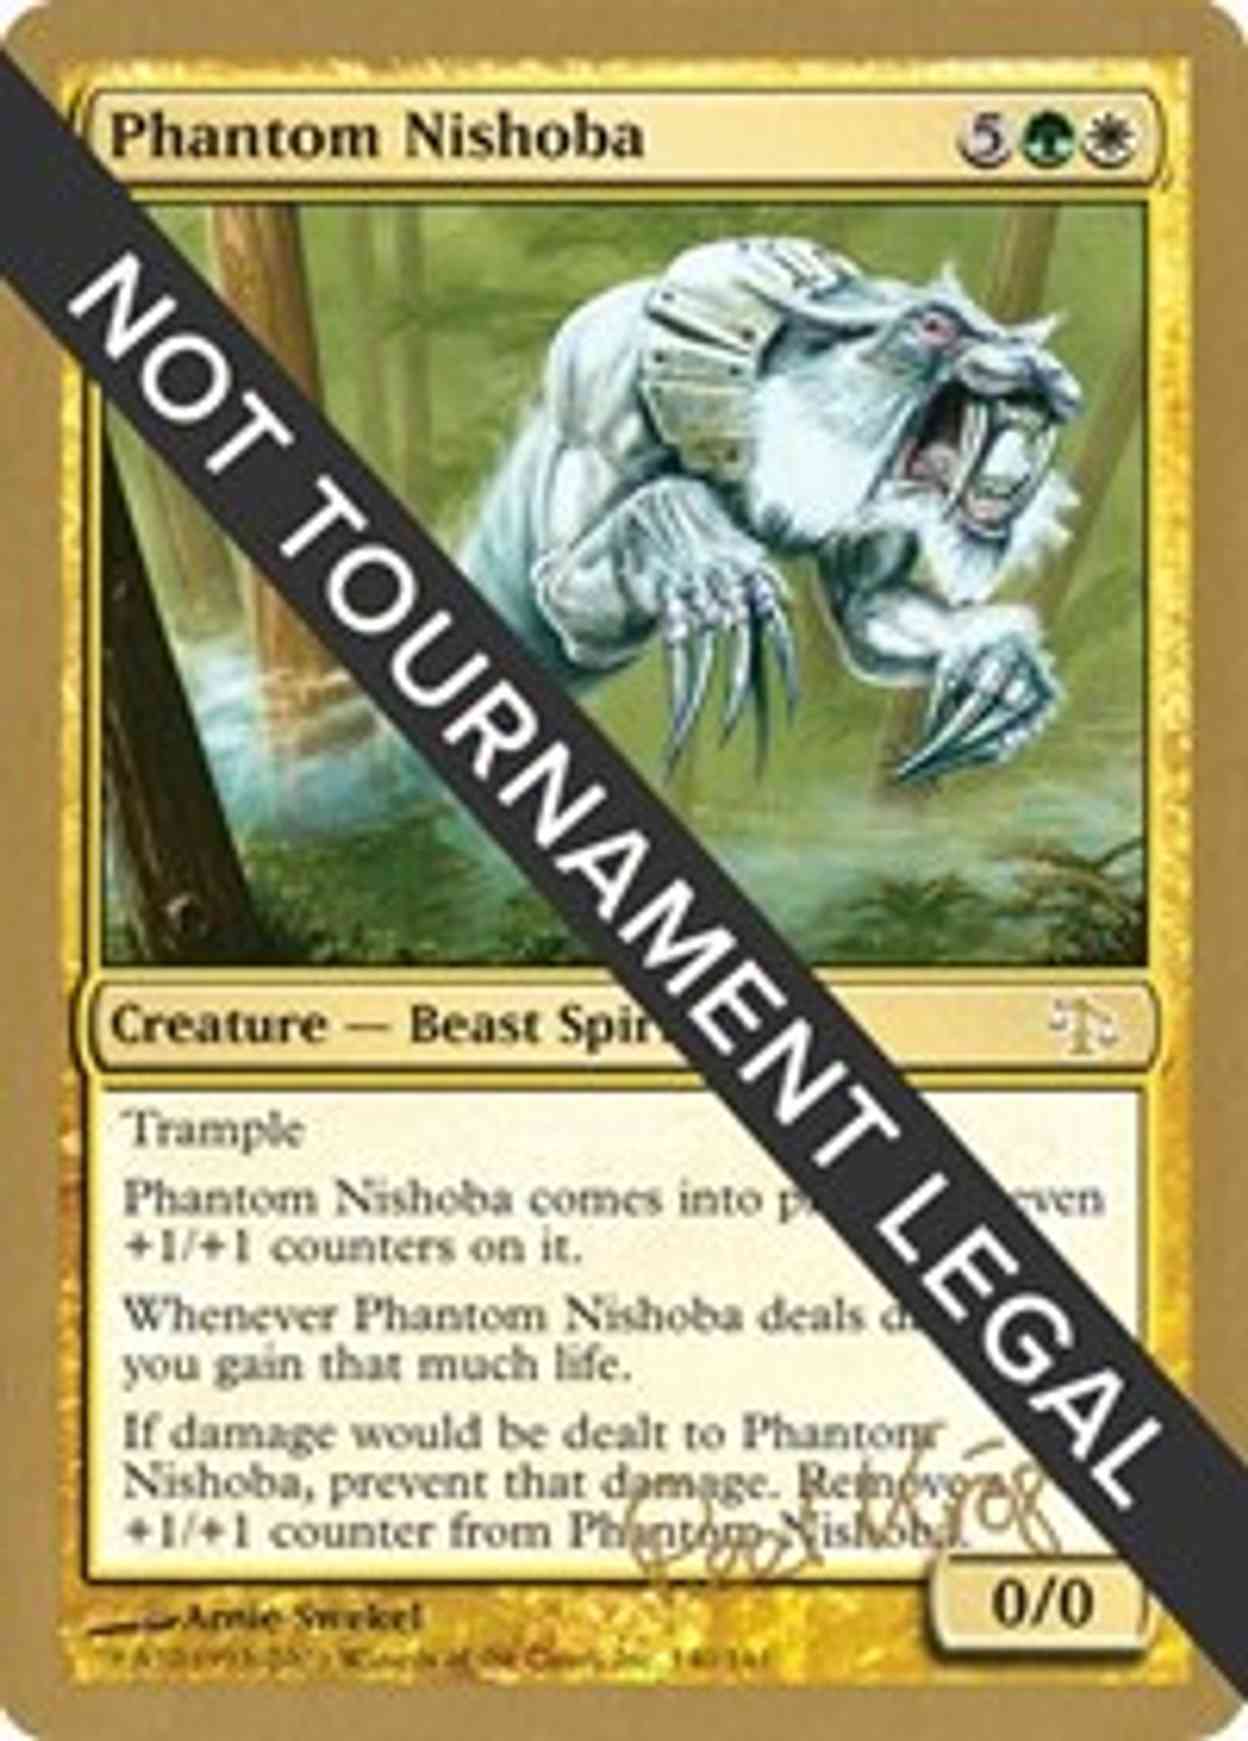 Phantom Nishoba - 2003 Peer Kroger (JUD) magic card front